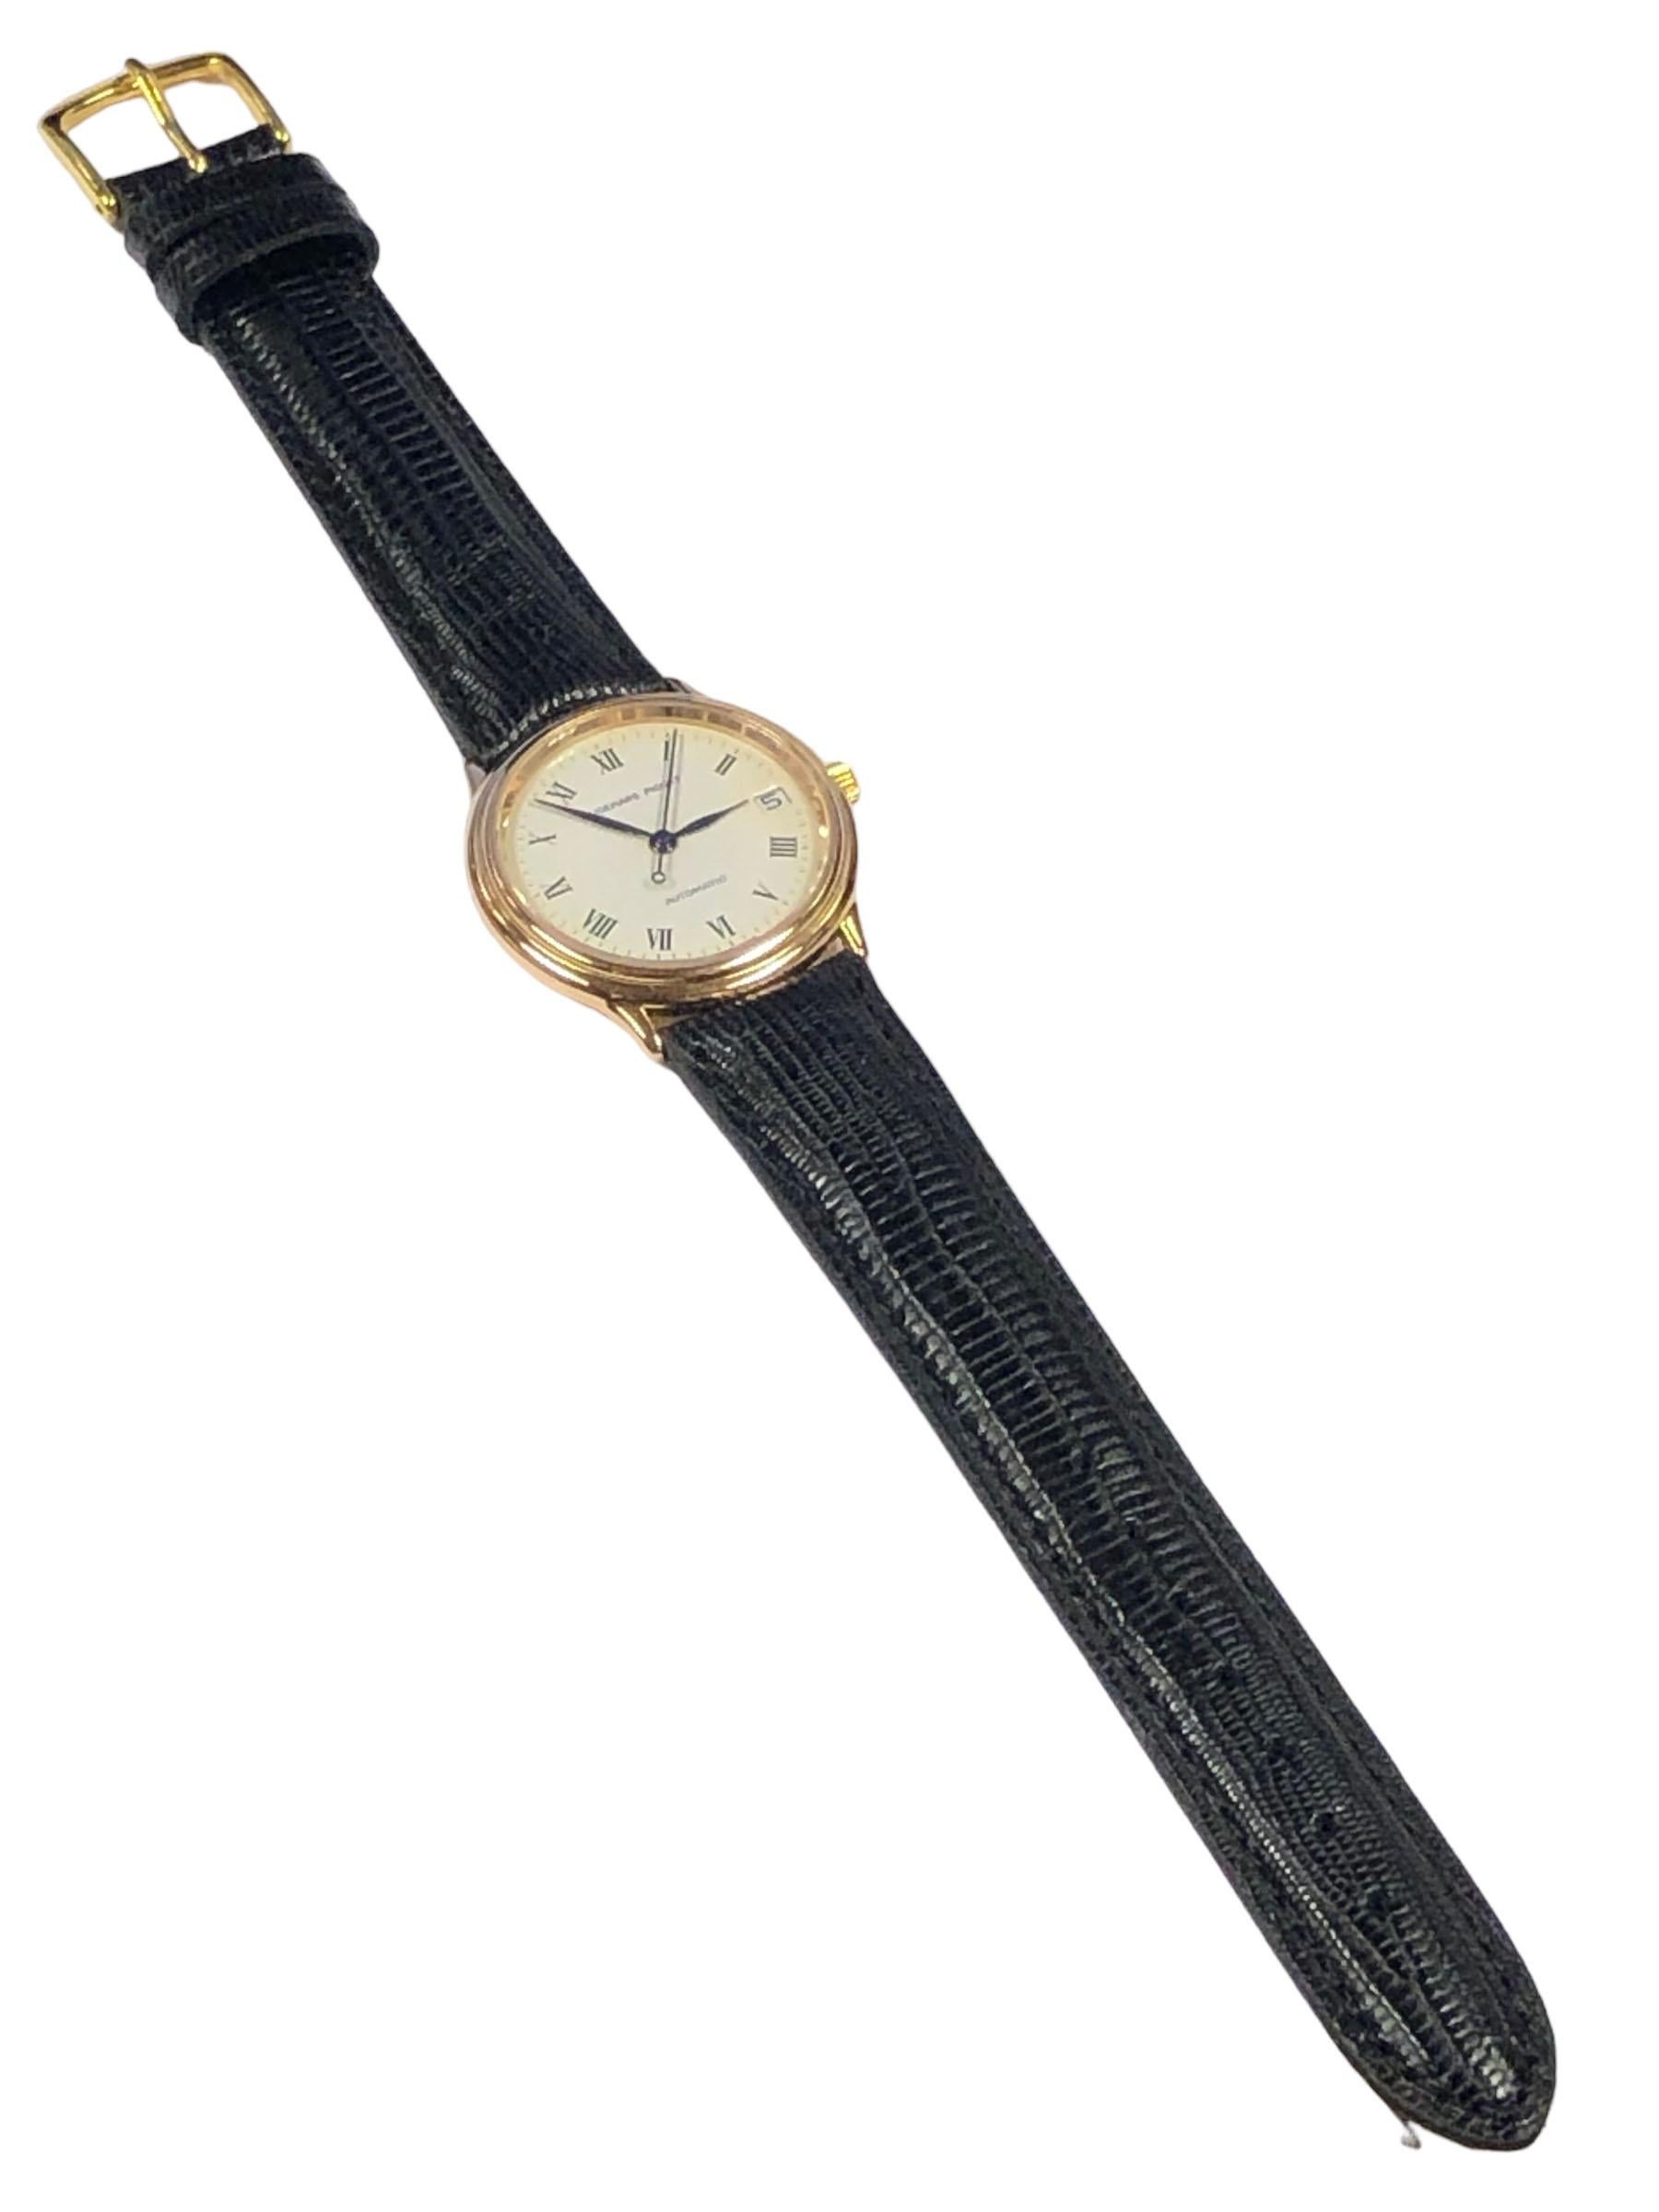 Audemars Piguet Ref 4161 Automatic Yellow Gold Wrist Watch For Sale 1